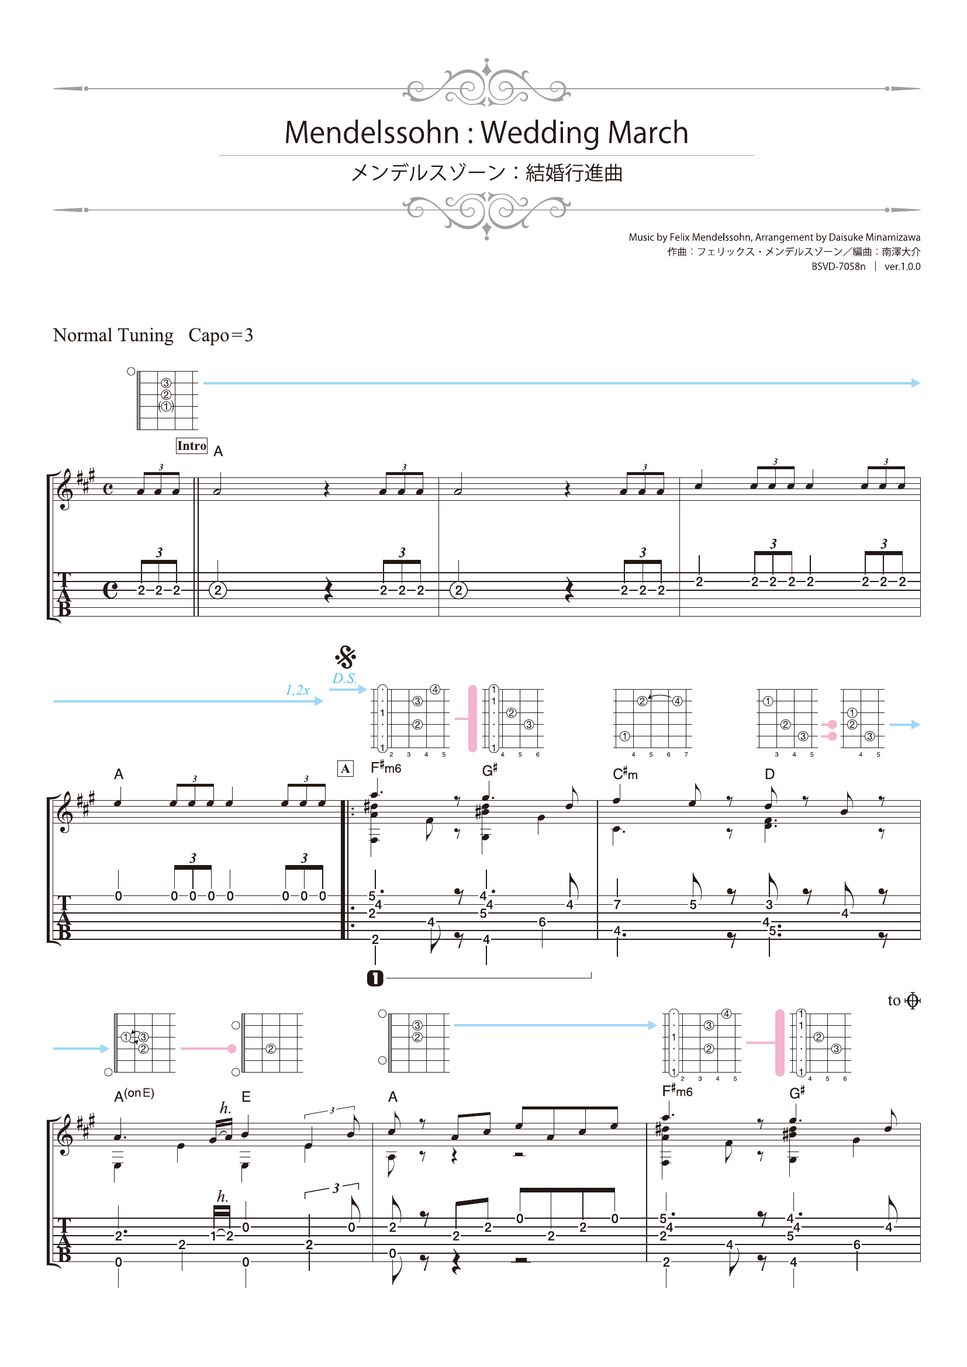 Felix Mendelssohn - Wedding March (Solo Guitar) by Daisuke Minamizawa